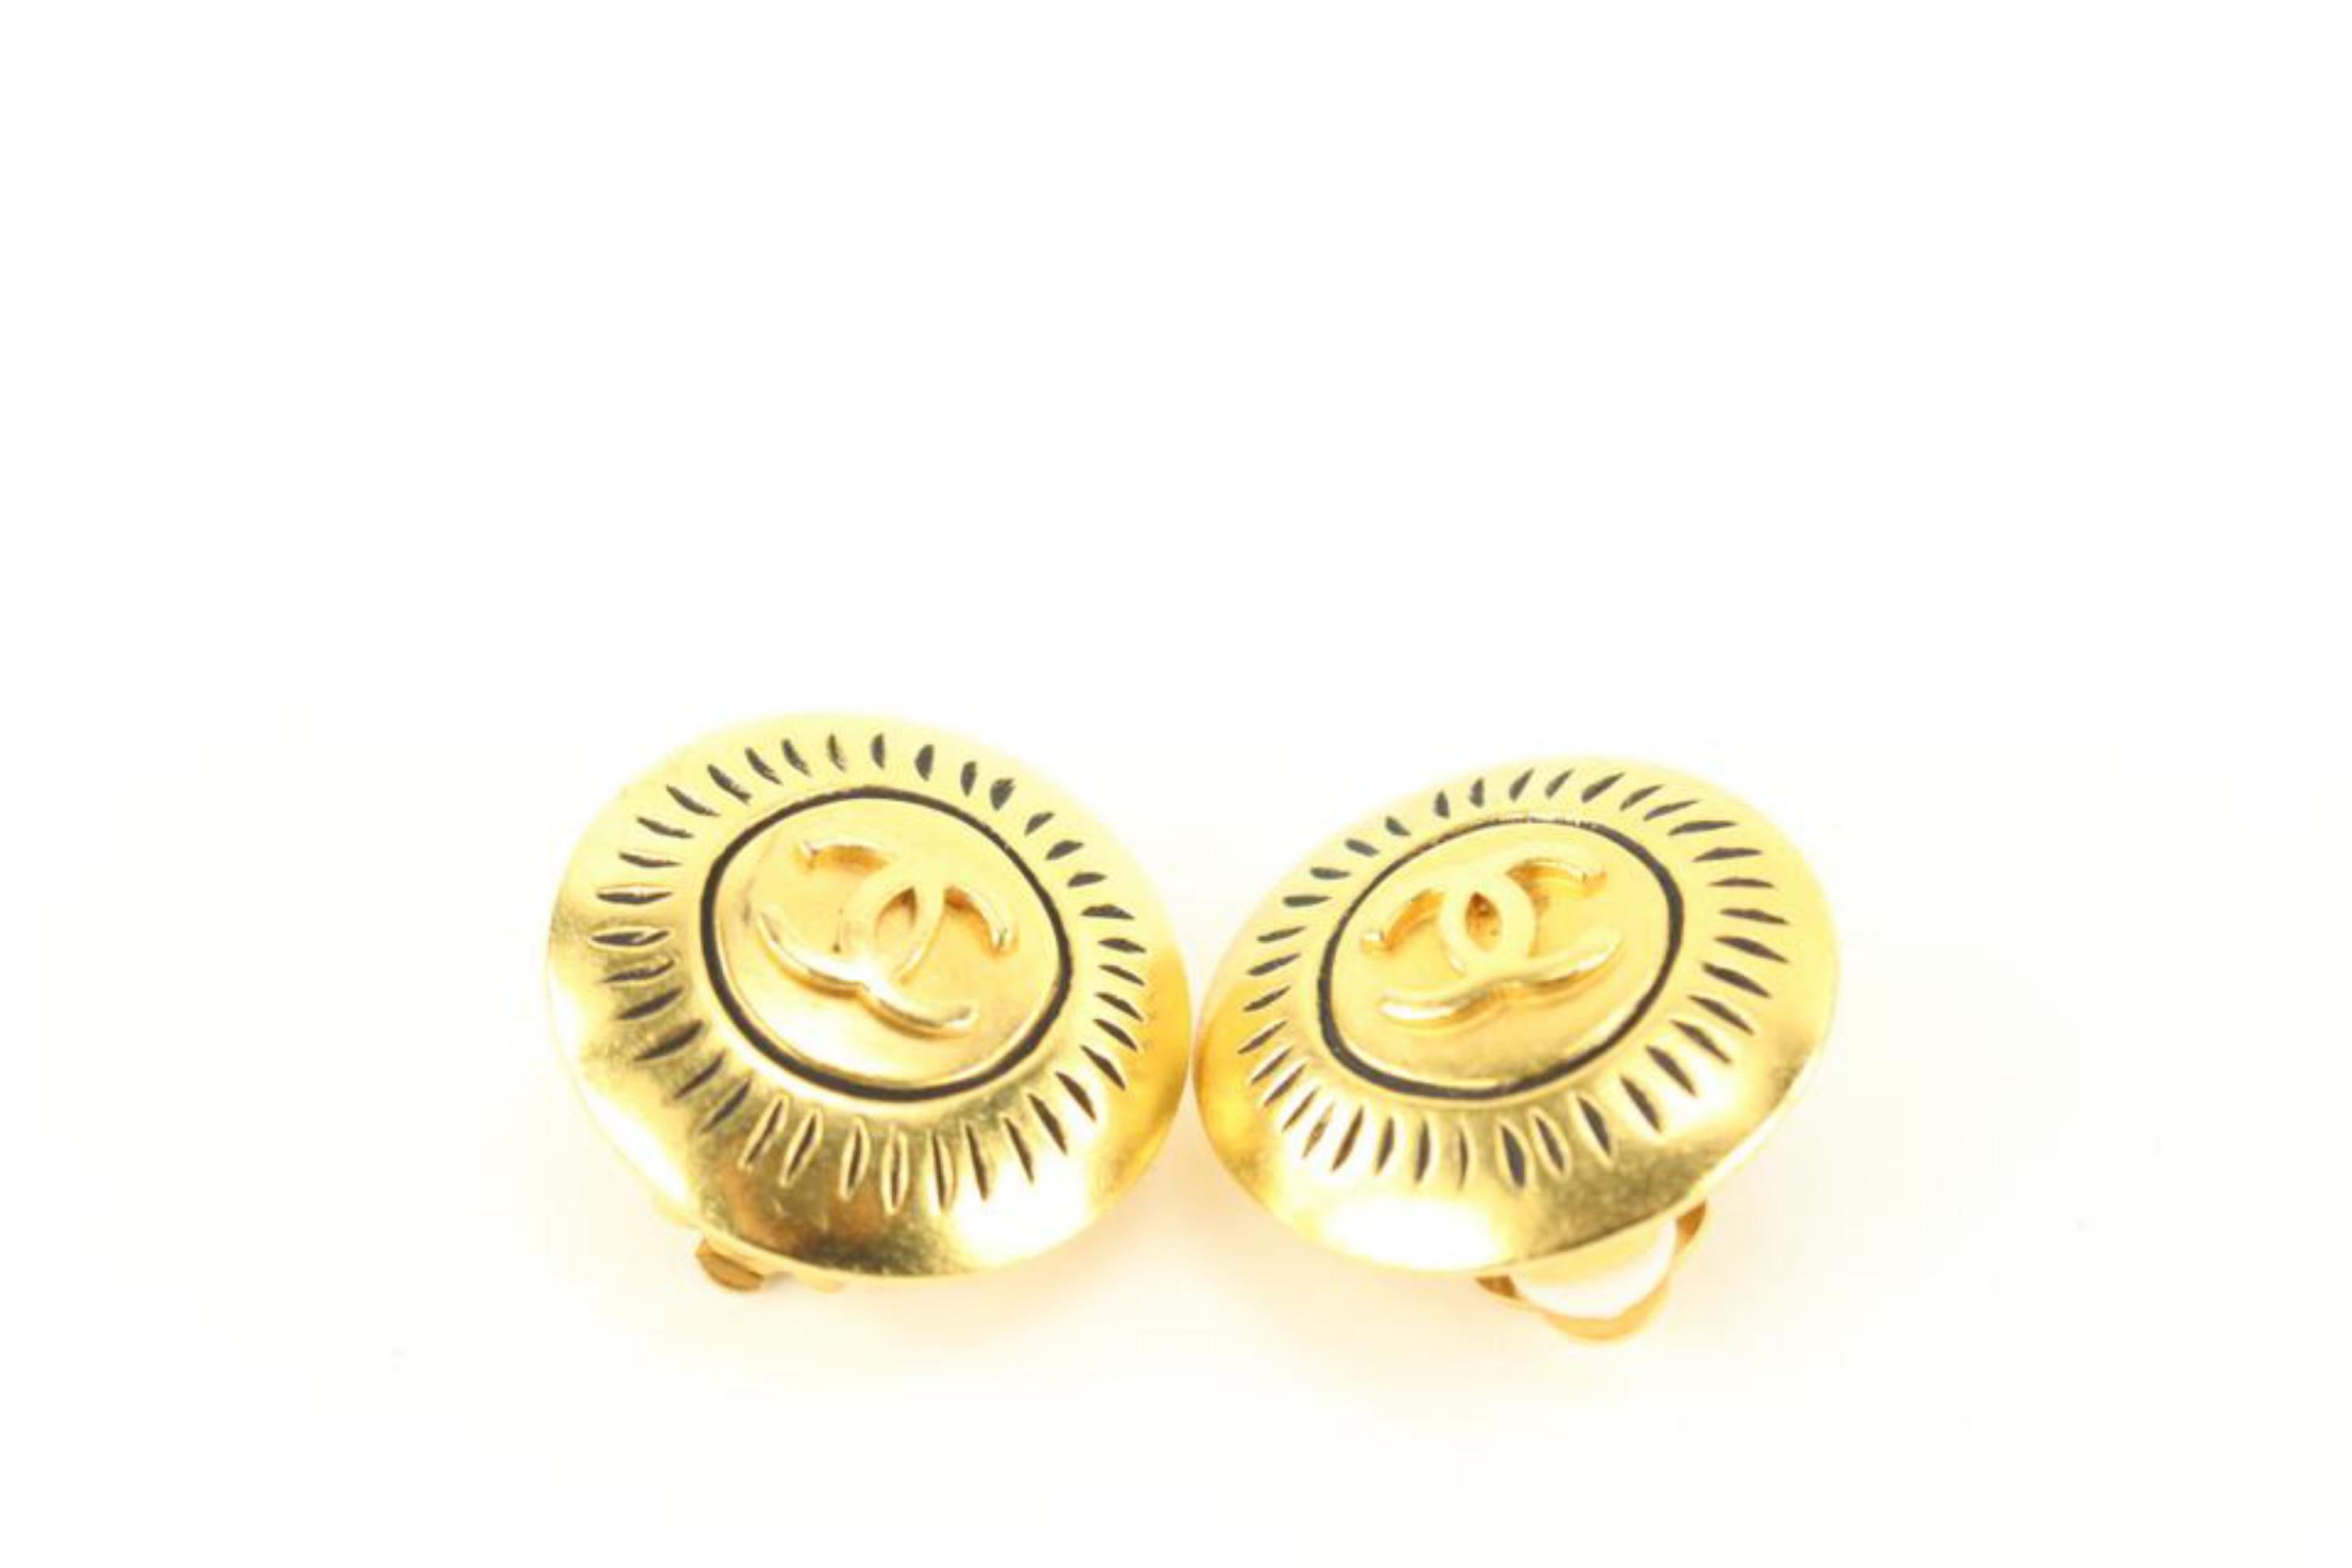 Chanel 96c Gold CC Earrings 53ck614s 2